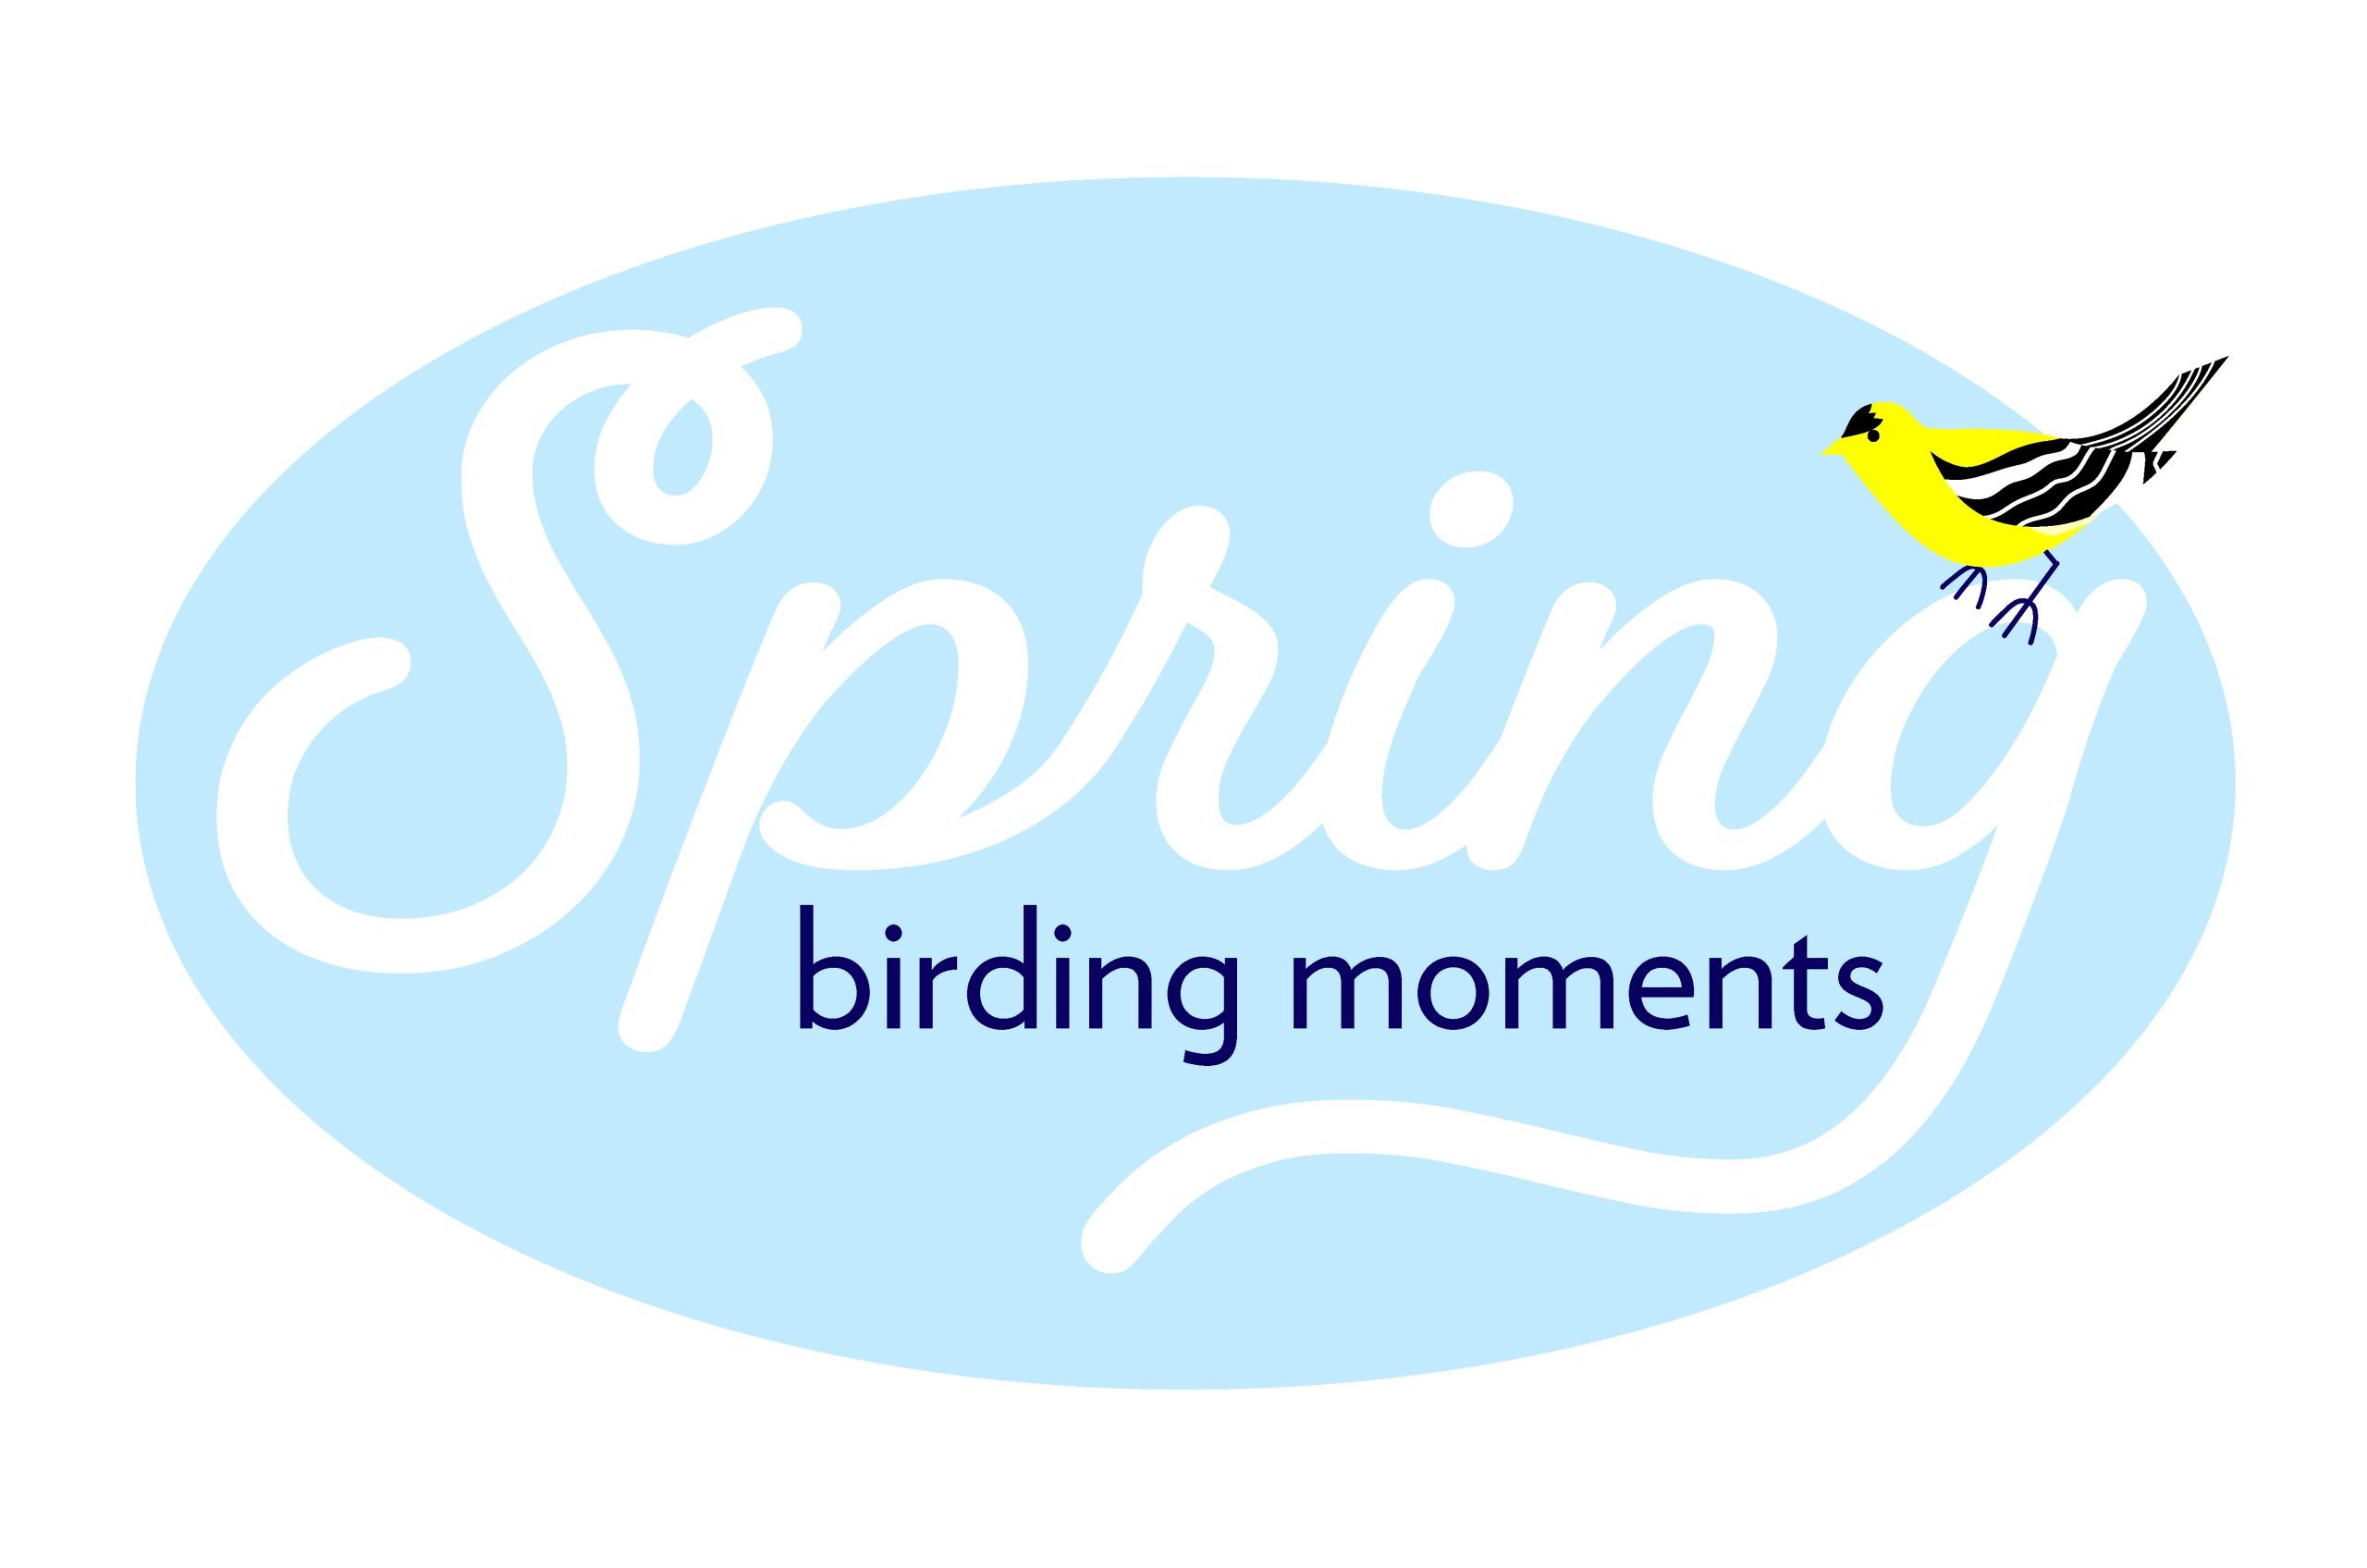 Spring birding moments video contest